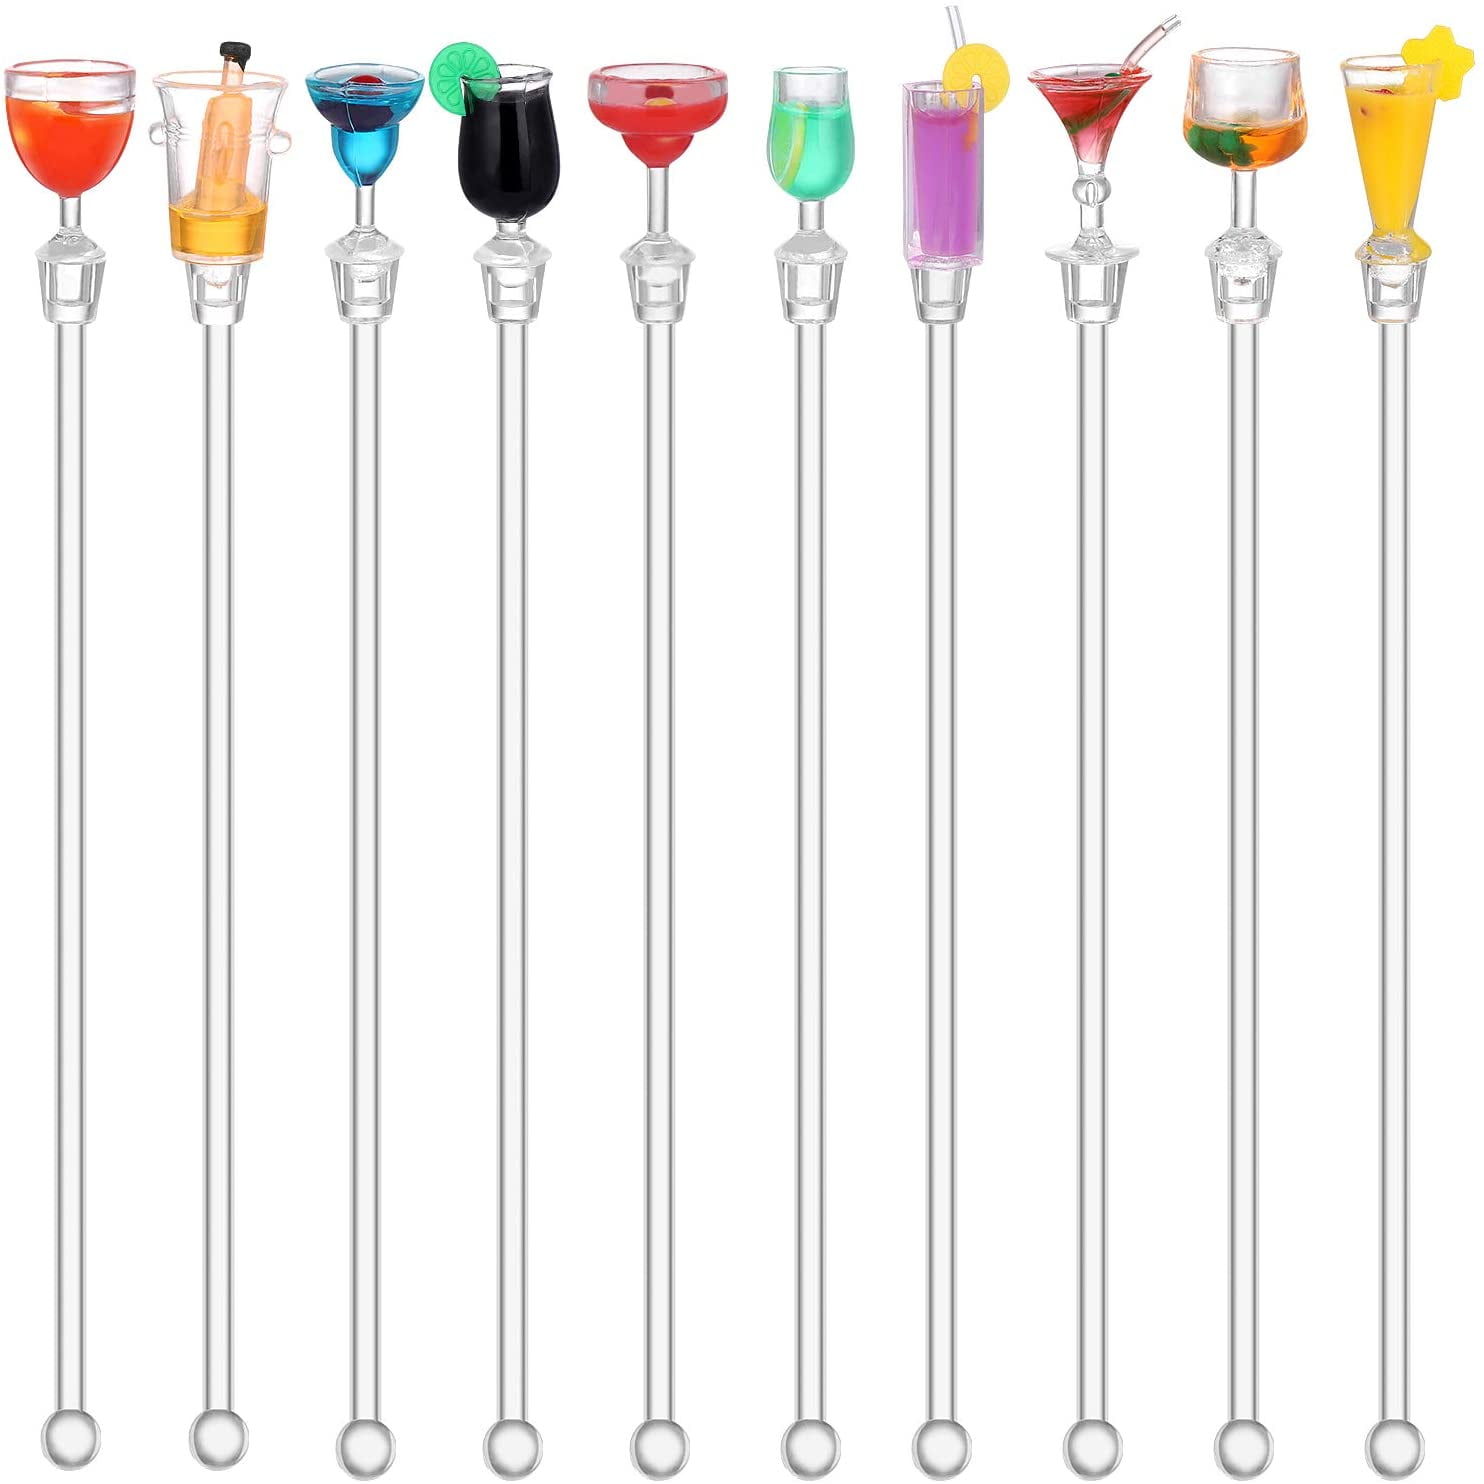 Swizzle Sticks Acrylic 23cm/9inch Bar Party Cocktail Fruit Juice Drink Wine Stirrer Sticks Set of 10 